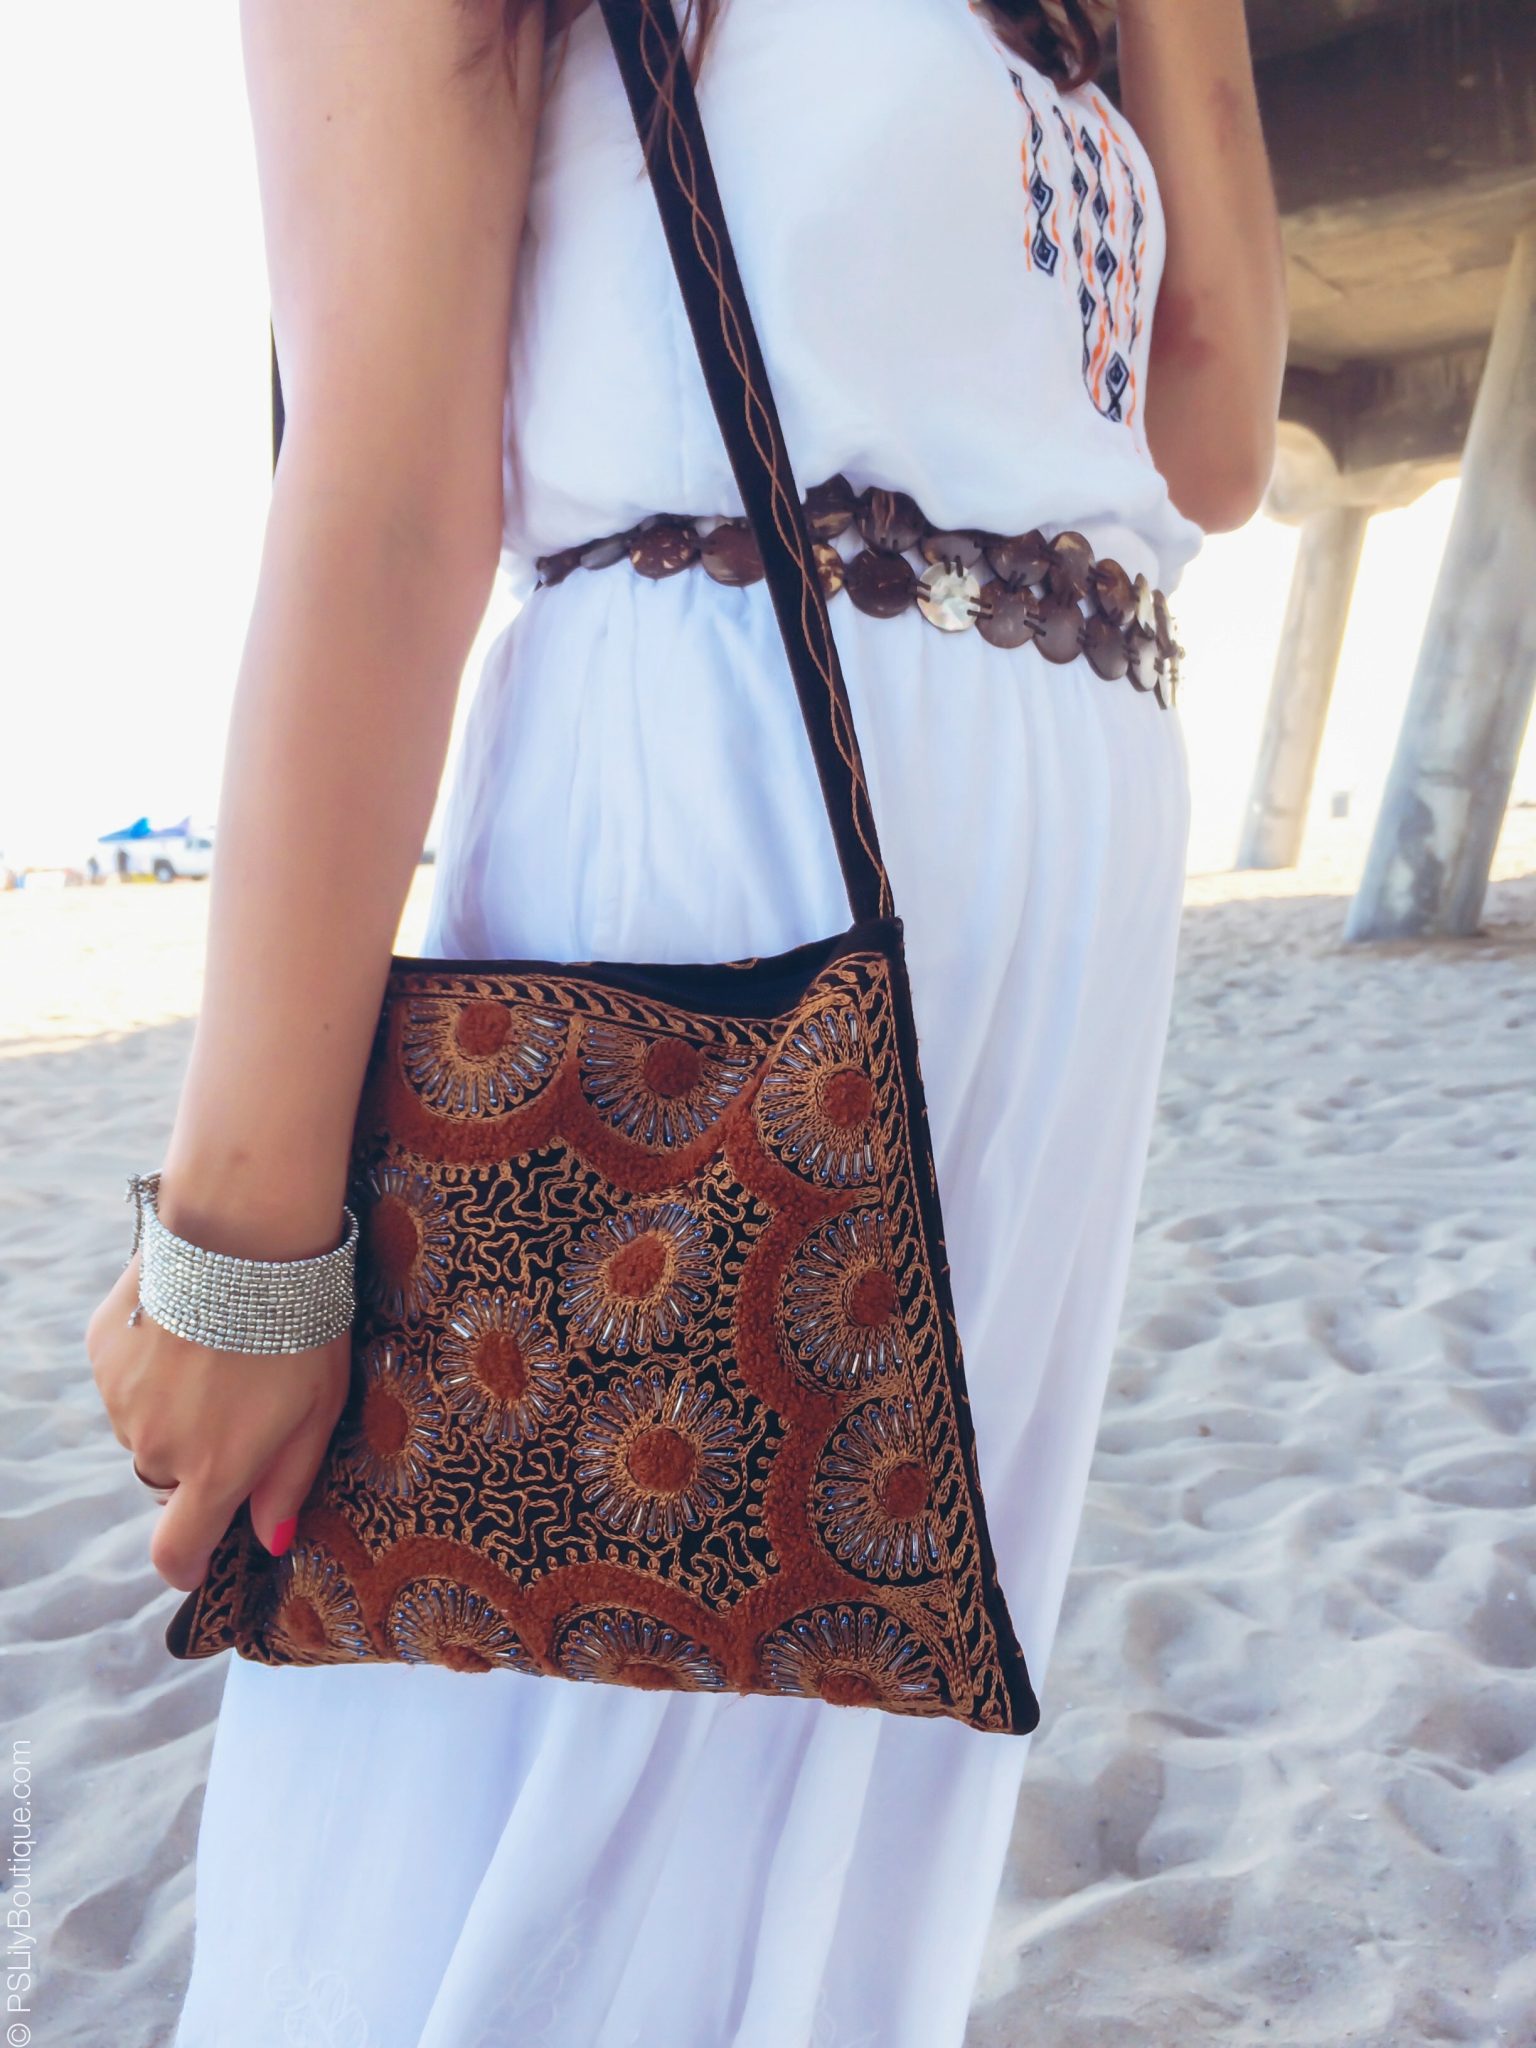 instagram-twitte-pslilyboutique-los-angeles-fashion-blogger-brown-vevet-embellished-cross-body-bag-bracelet-white-skirt-shirt-10-25-2015, huntington beach